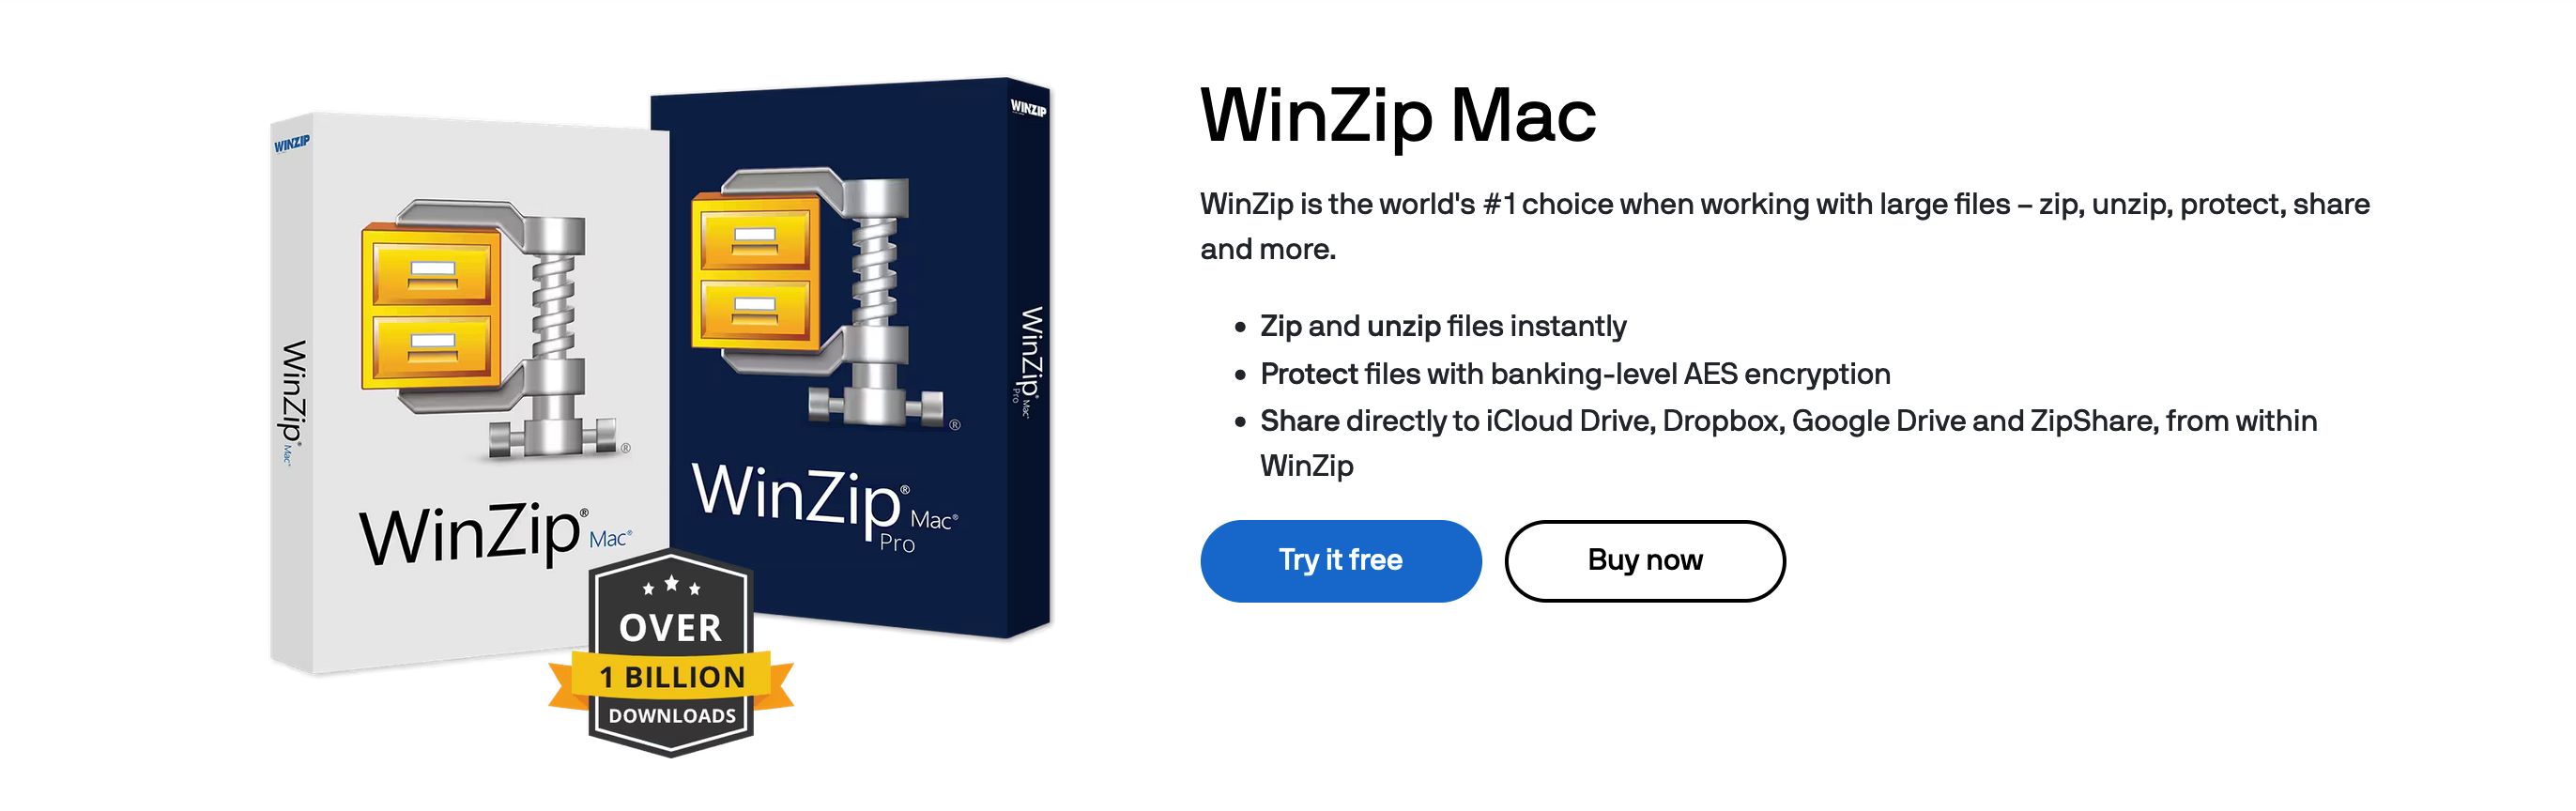 Sitio oficial de WinZip.